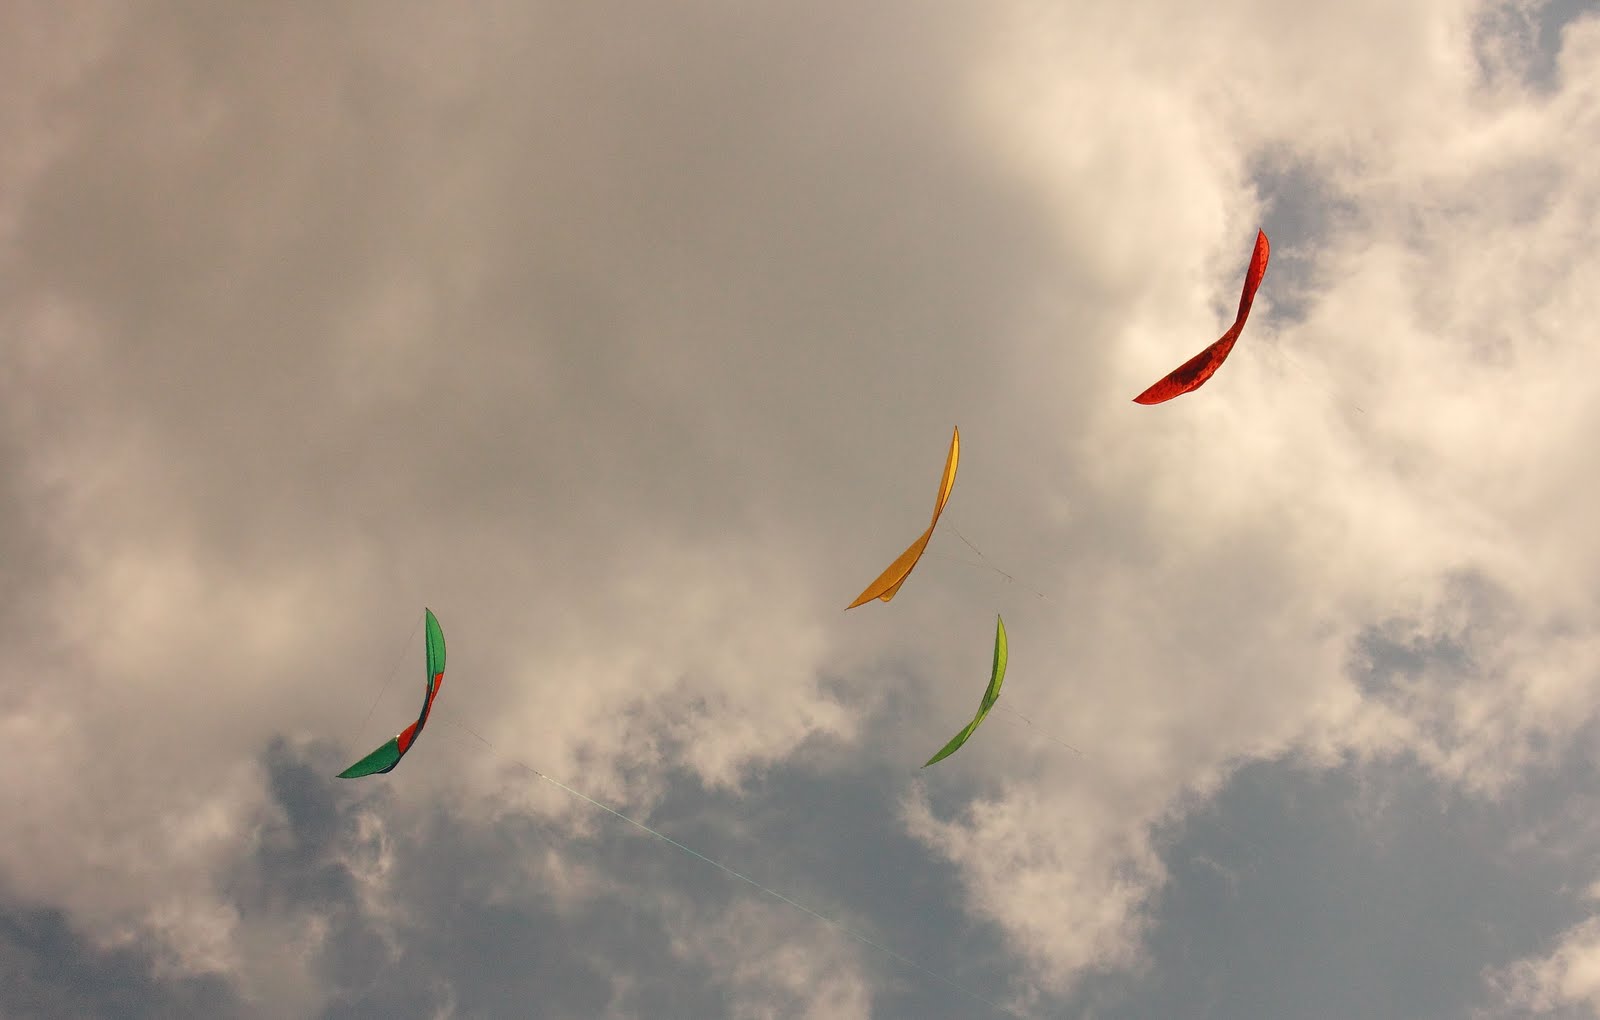 Part 2: Kelantan International Kite Festival 2011